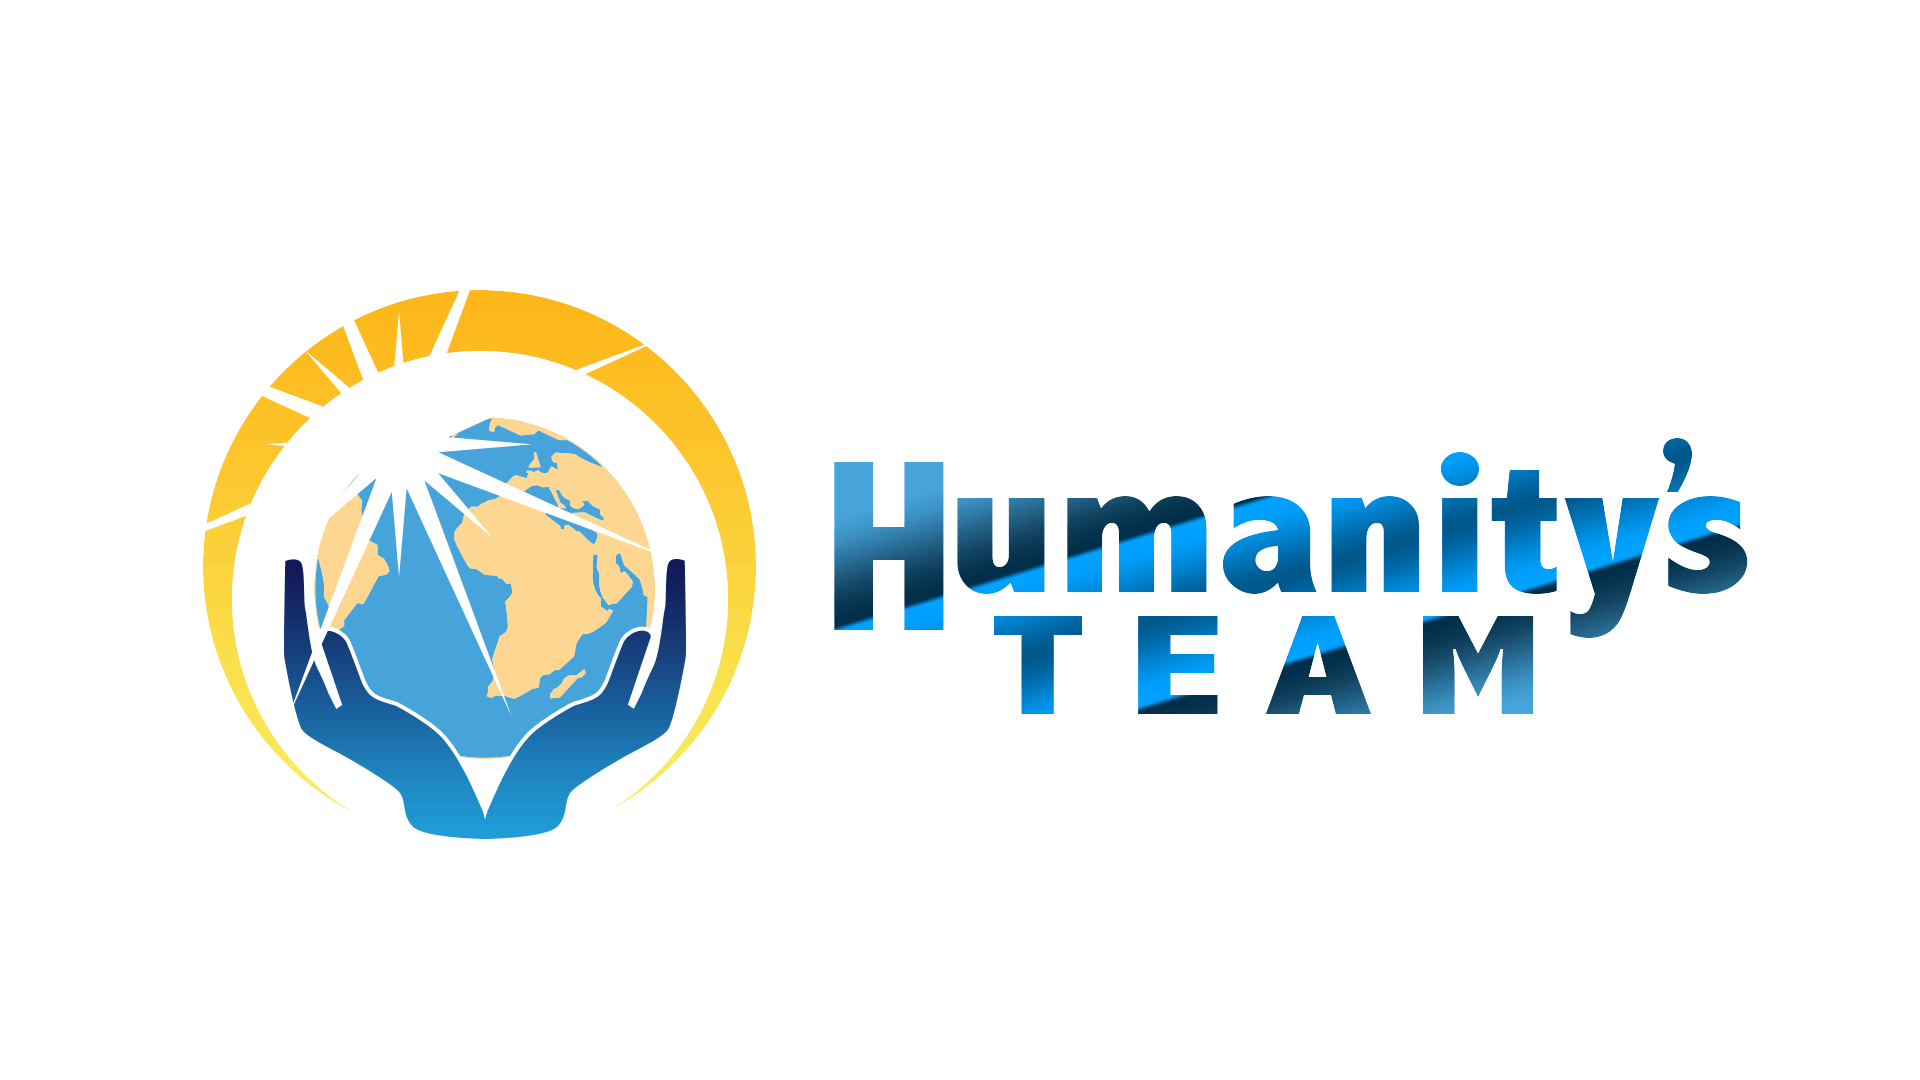 Humanity's Team